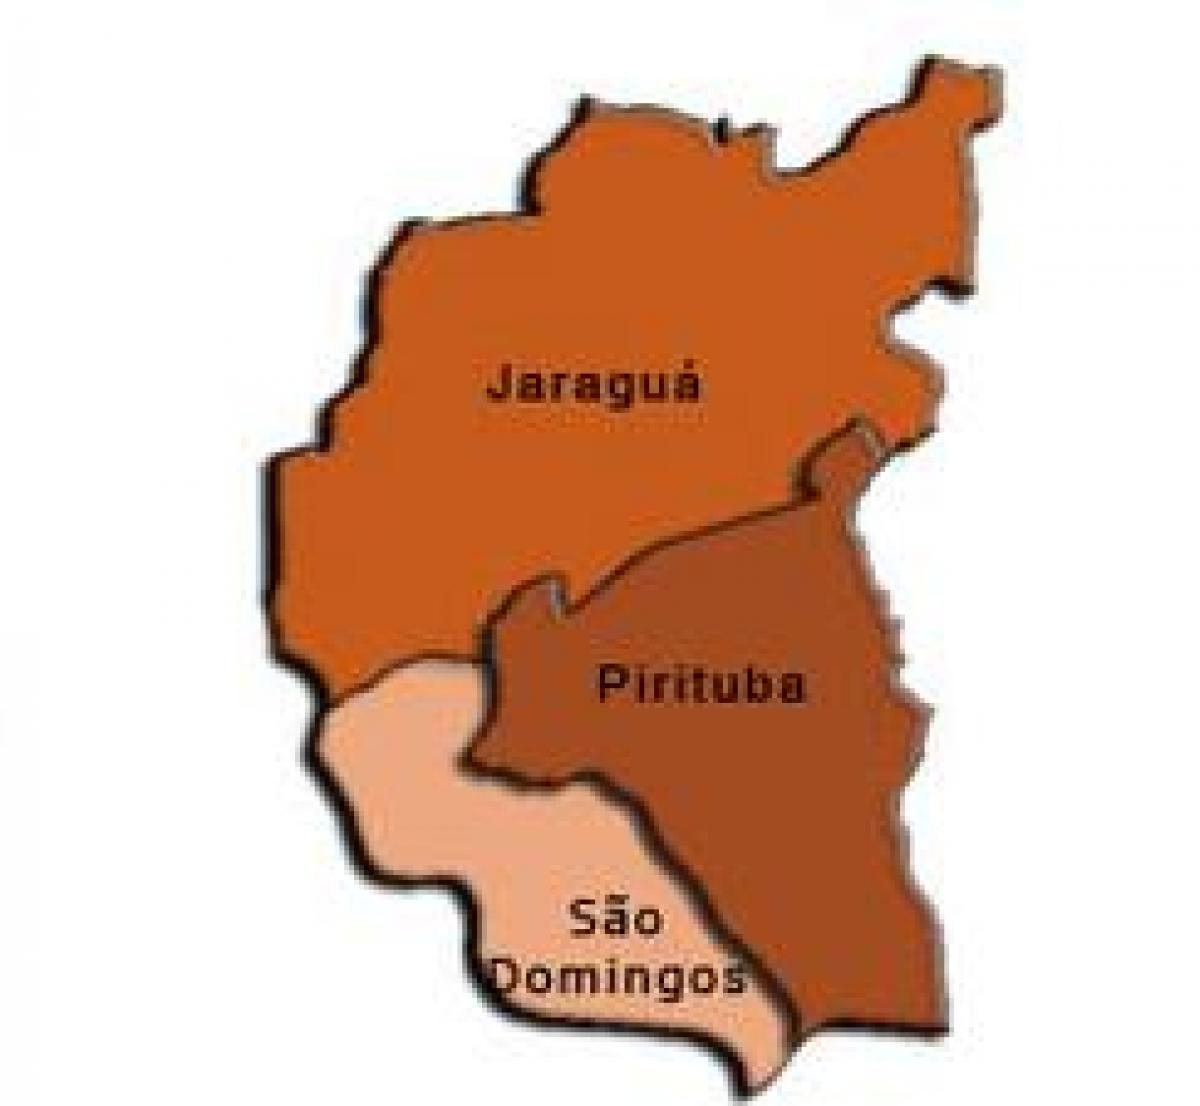 Kart over Pirituba-Jaraguá sub-prefecture